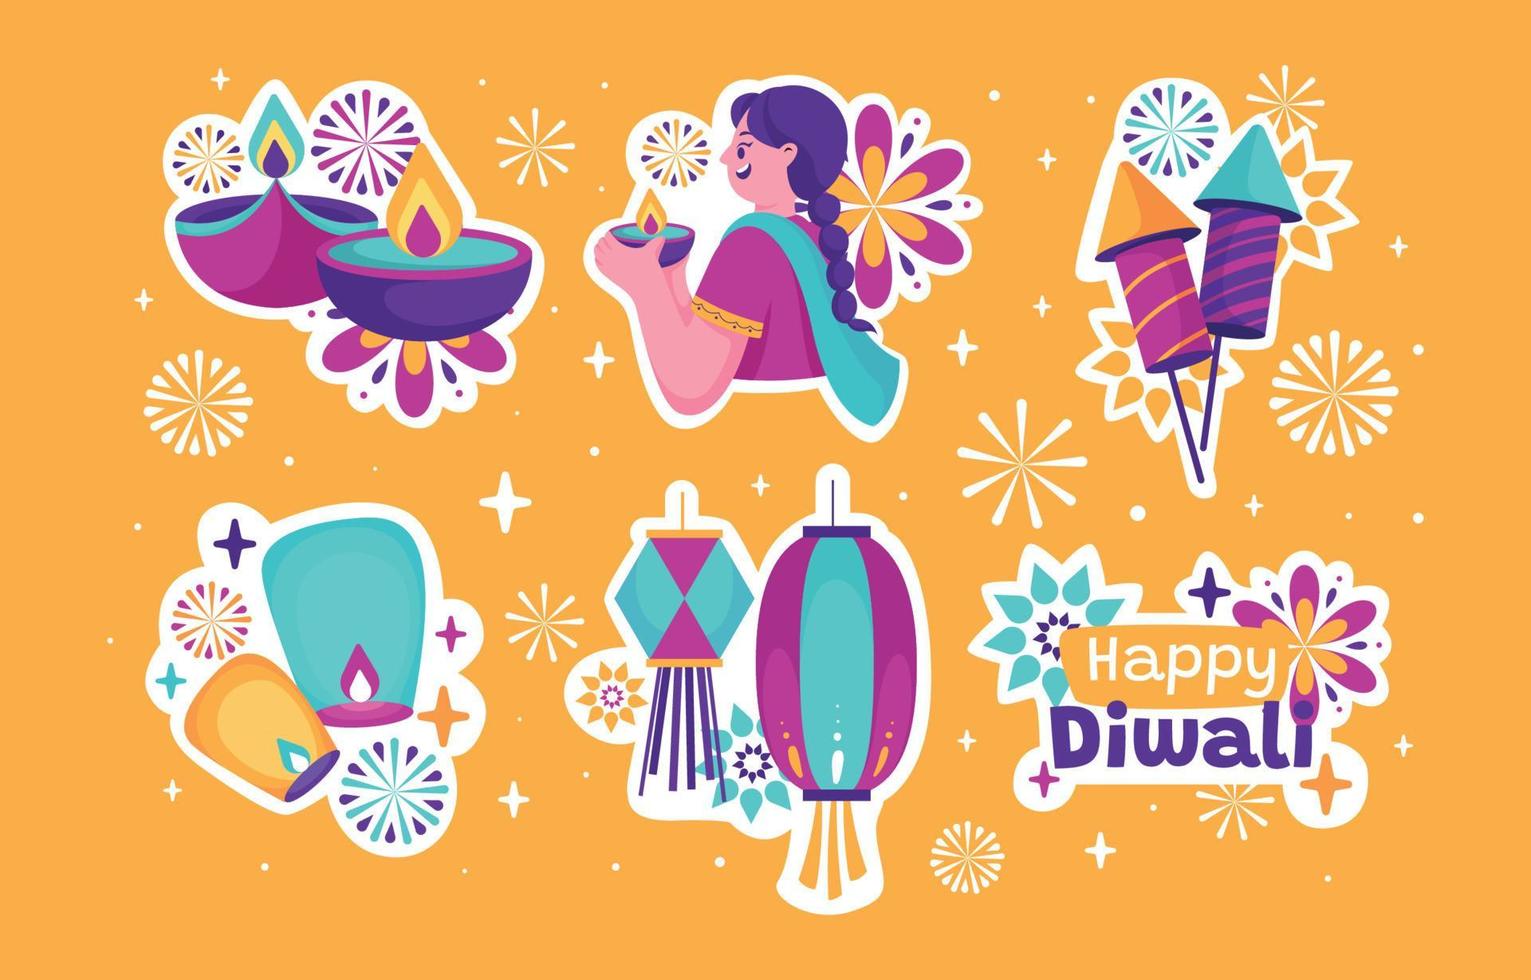 etiqueta engomada del festival de diwali vector